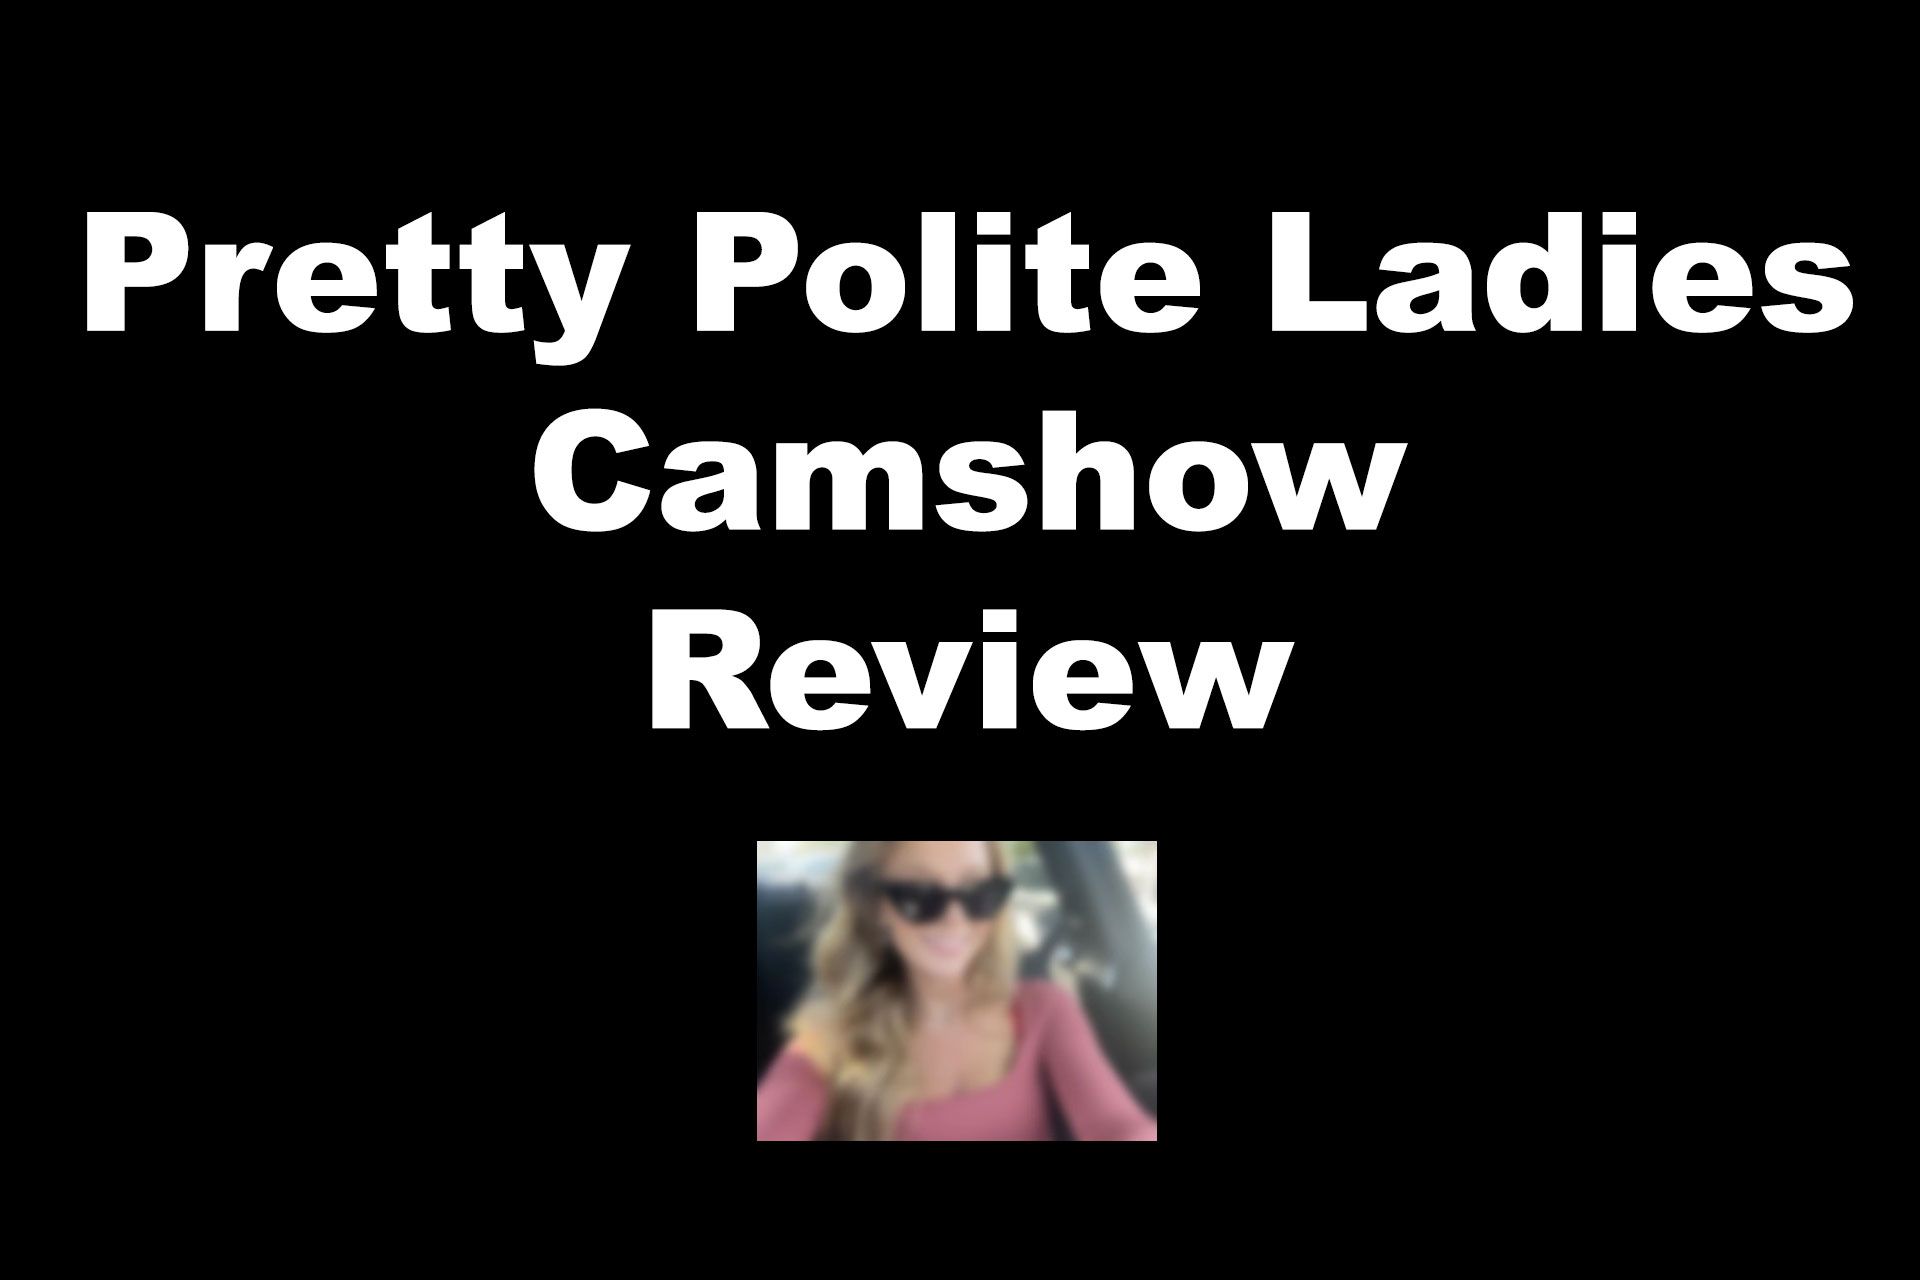 prettypoliteladies review